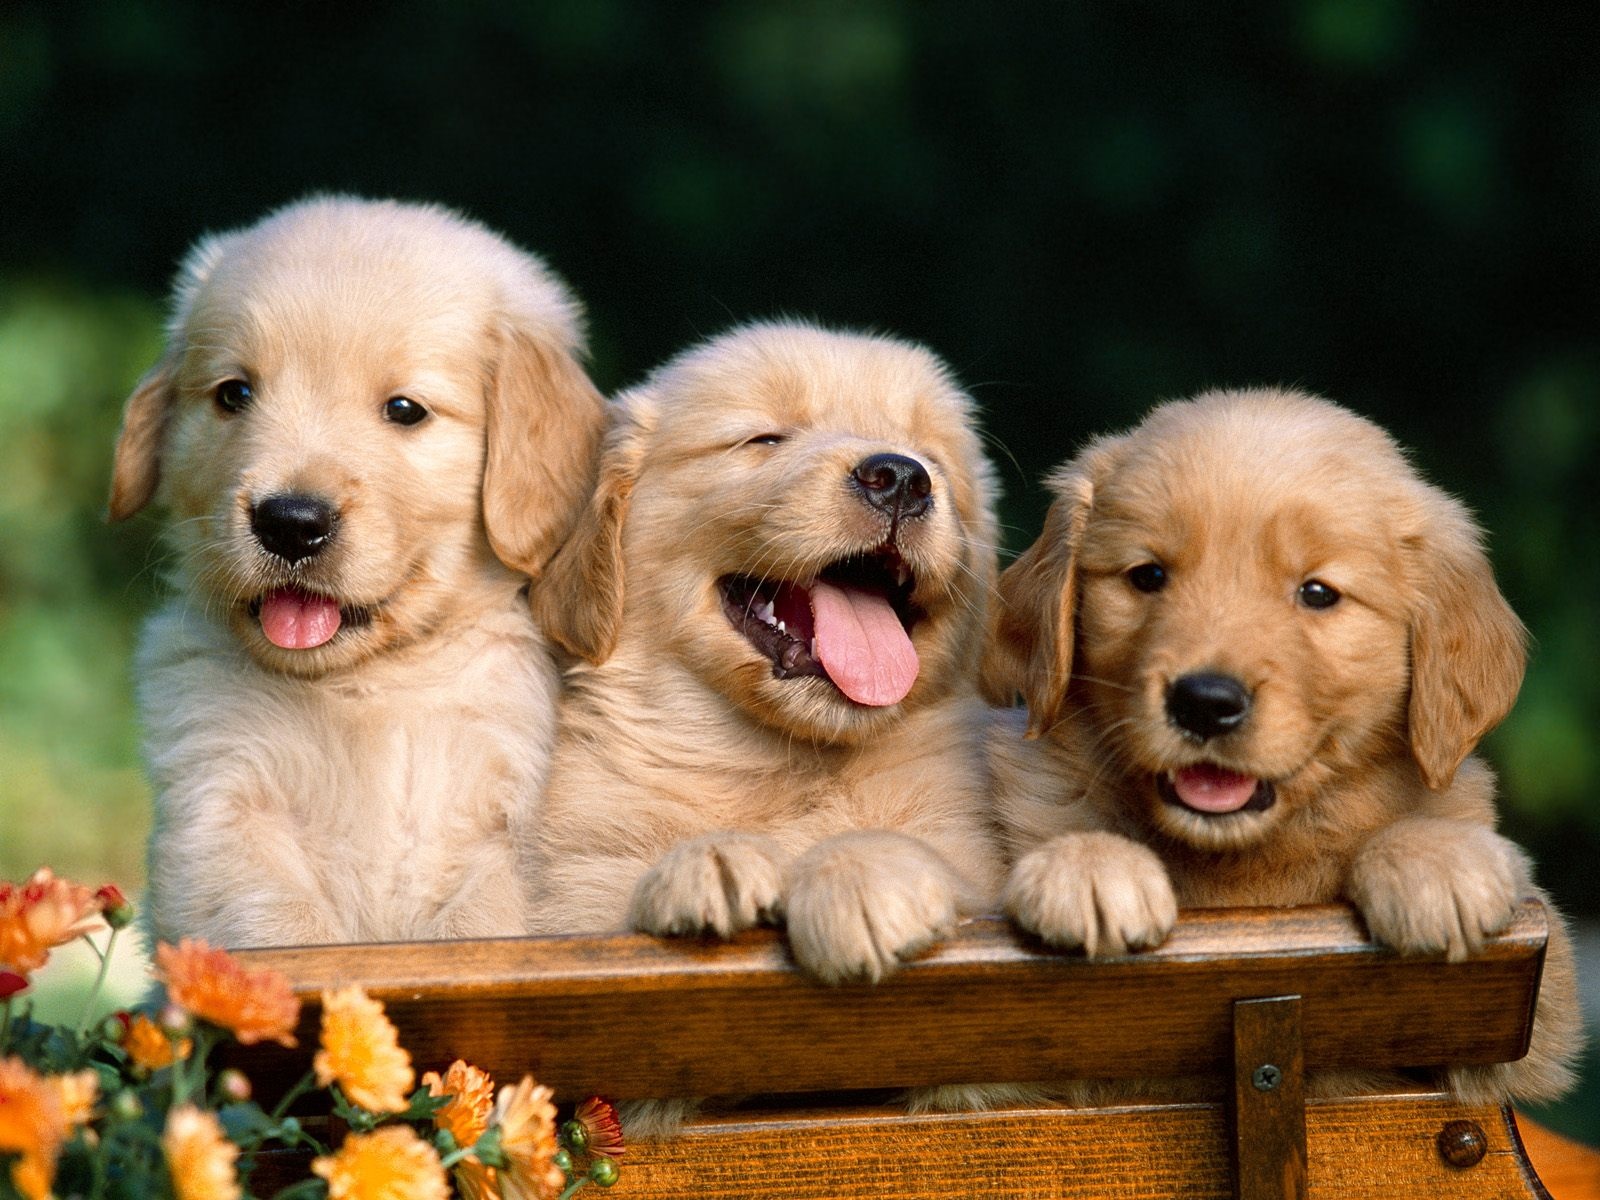 49+] Cute Golden Retriever Puppies Wallpaper - WallpaperSafari